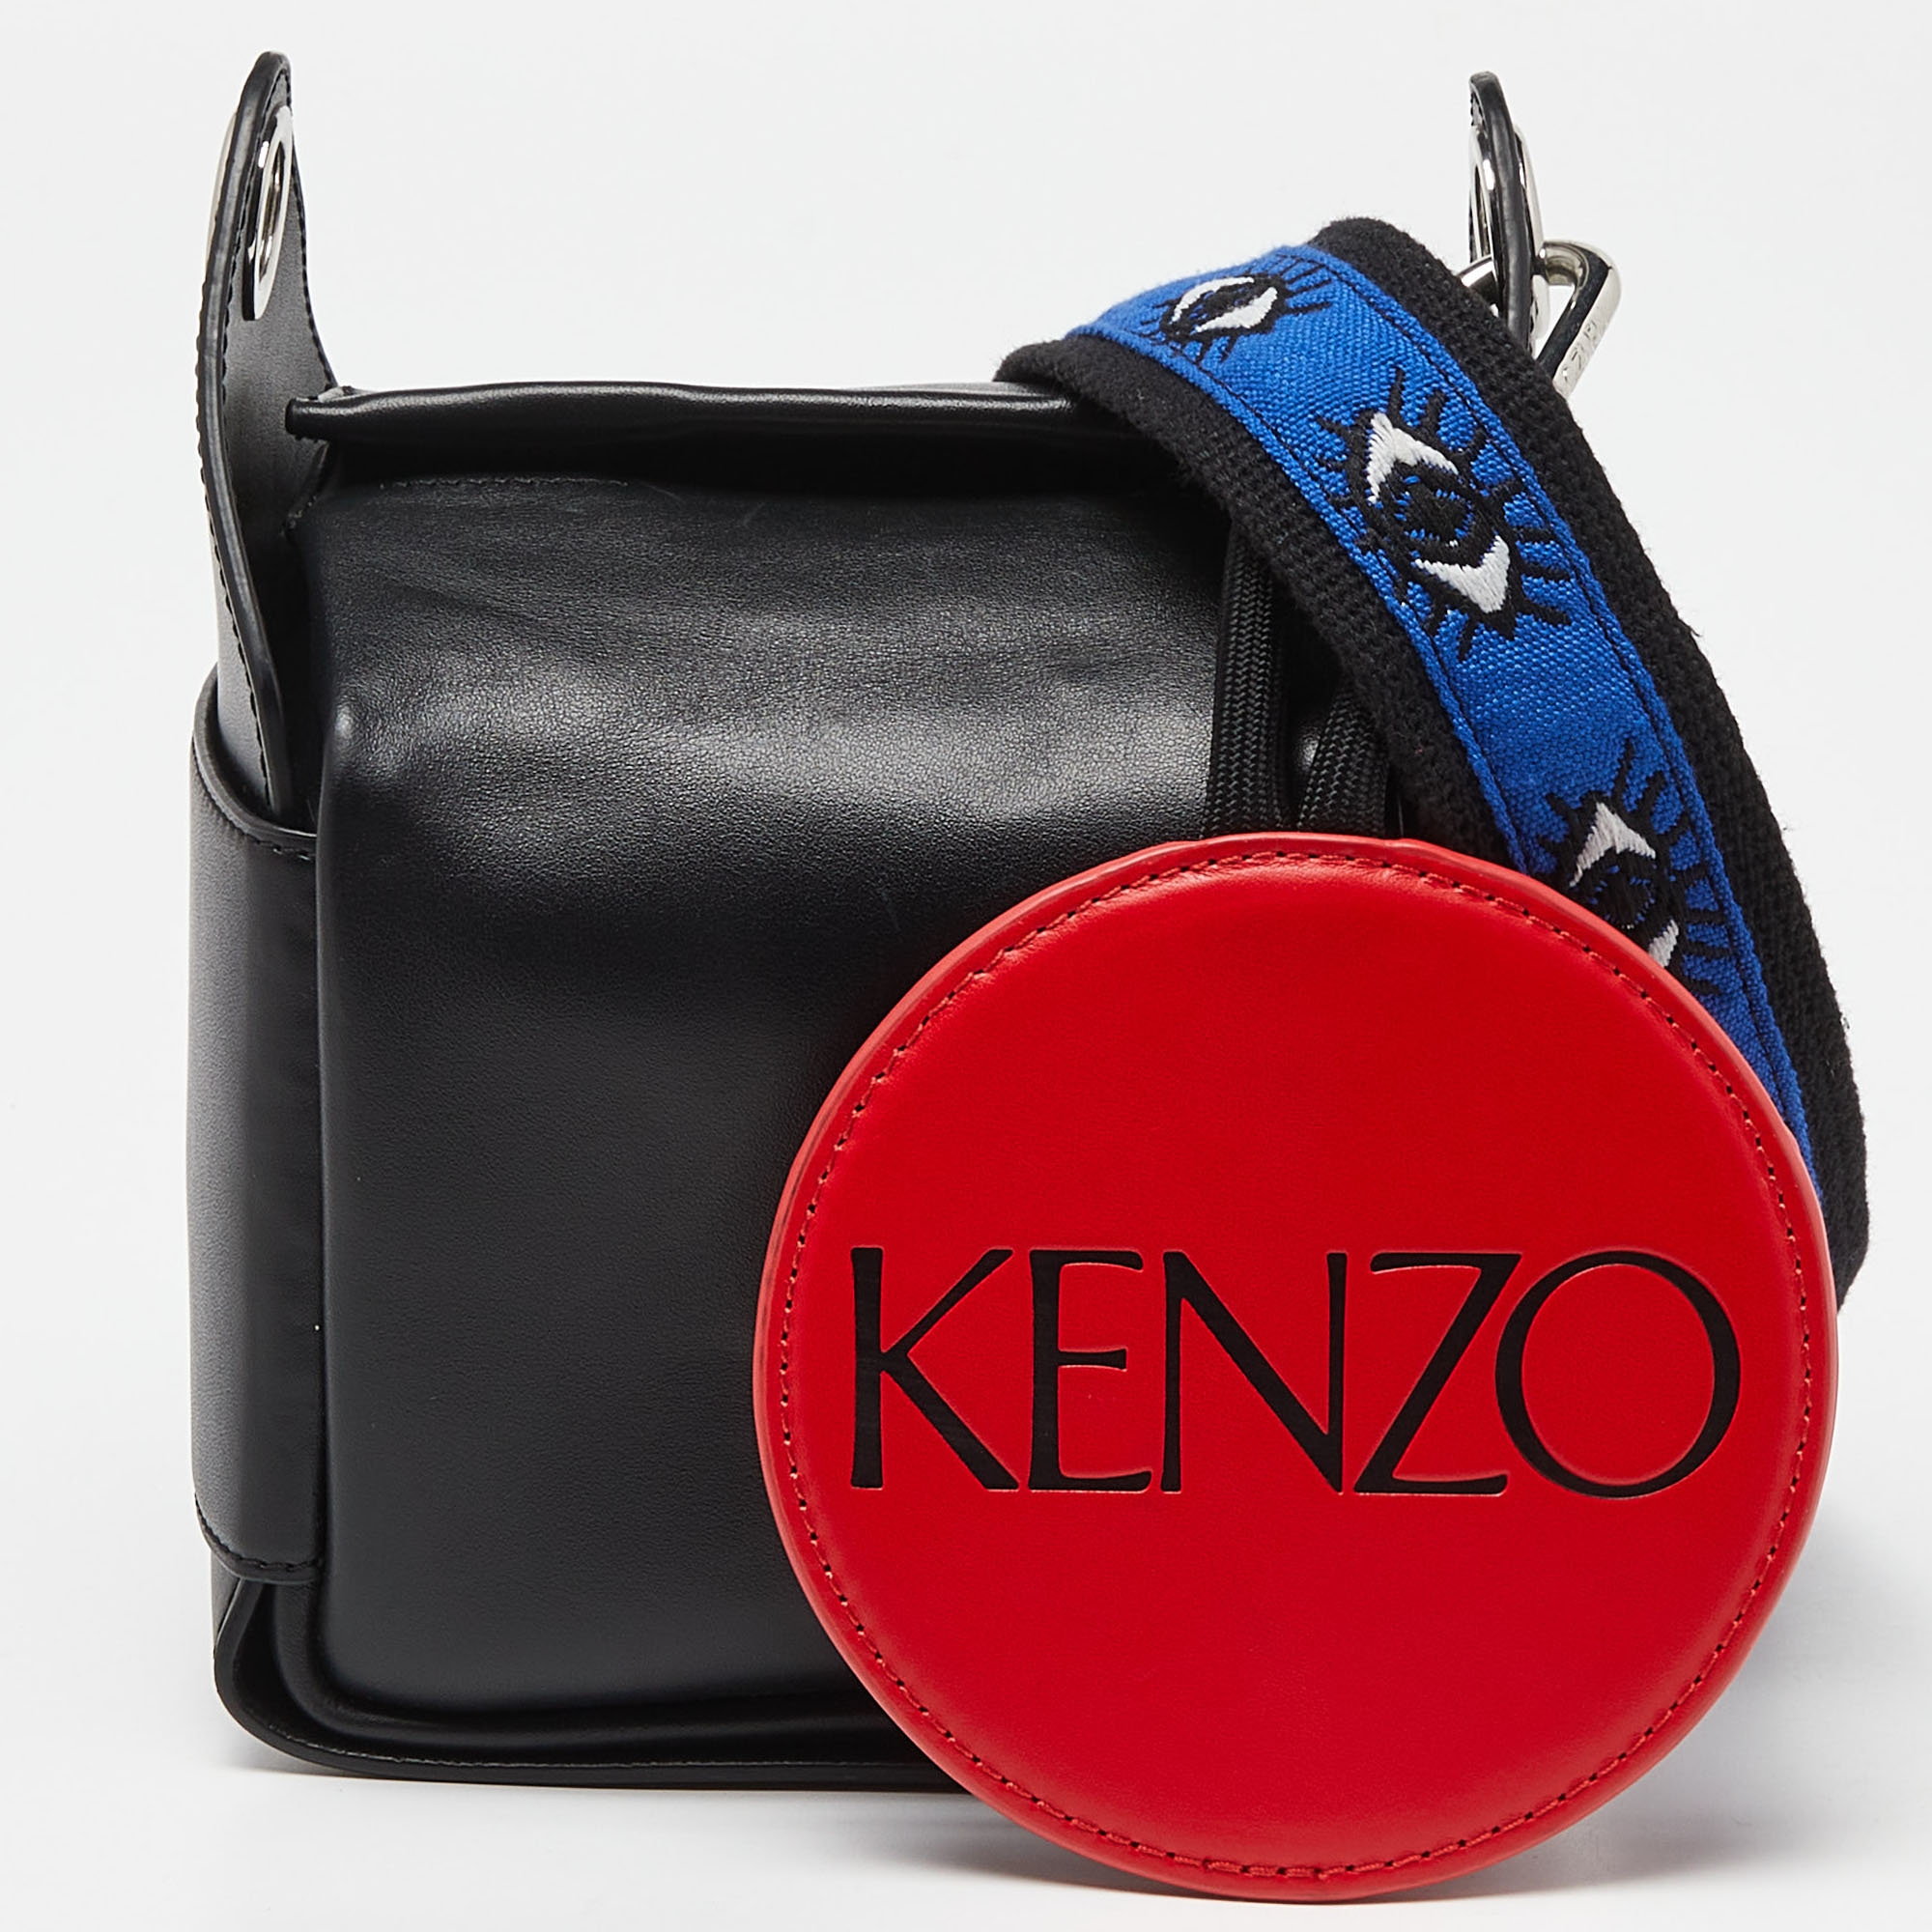 

Kenzo Black Leather Crossbody Bag